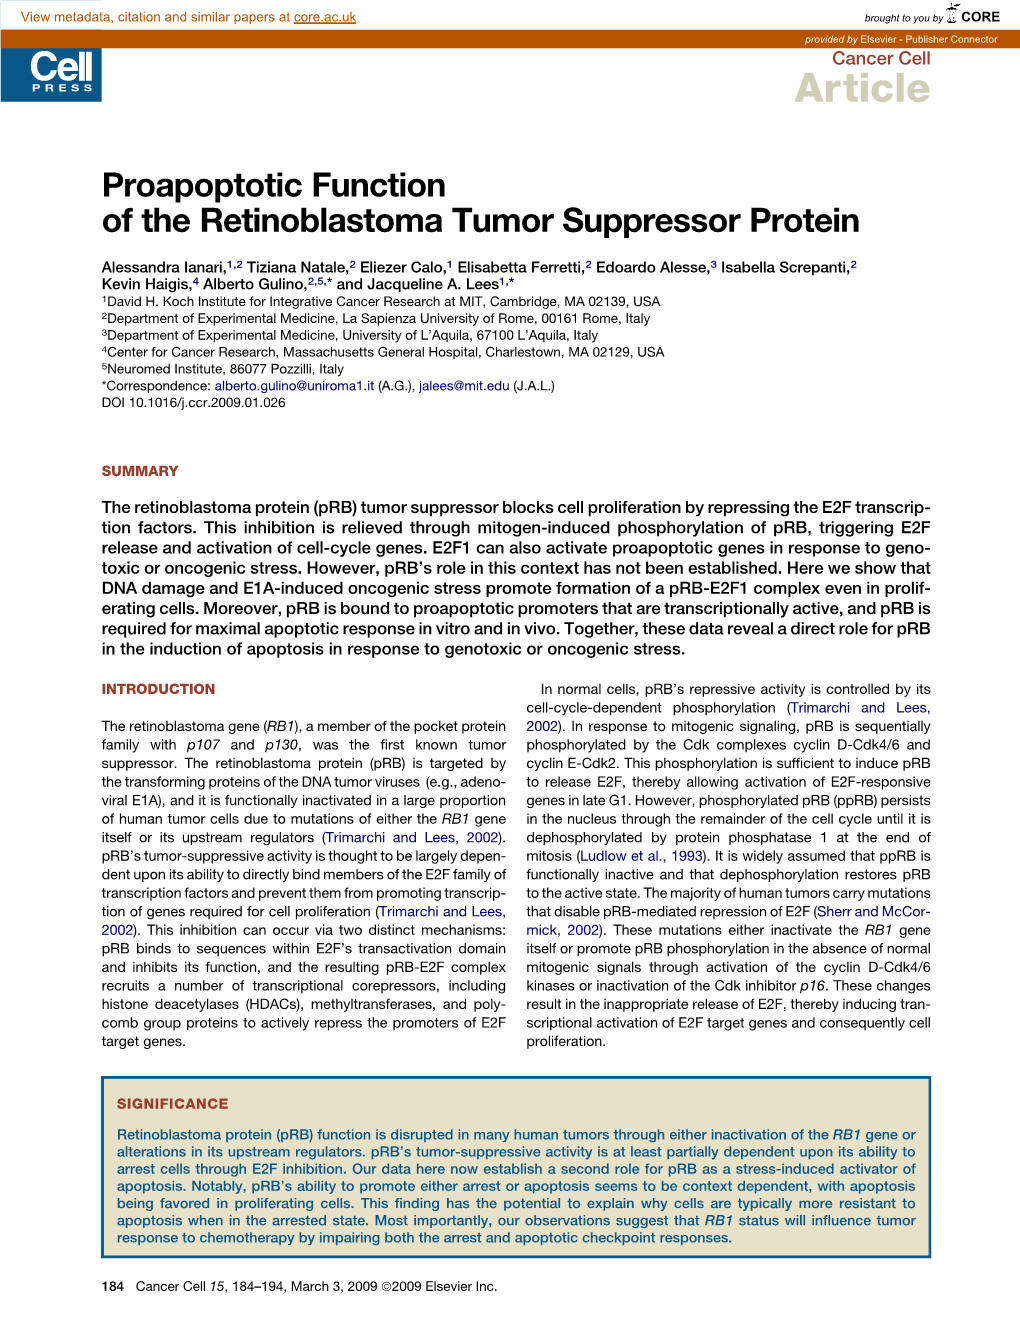 Proapoptotic Function of the Retinoblastoma Tumor Suppressor Protein